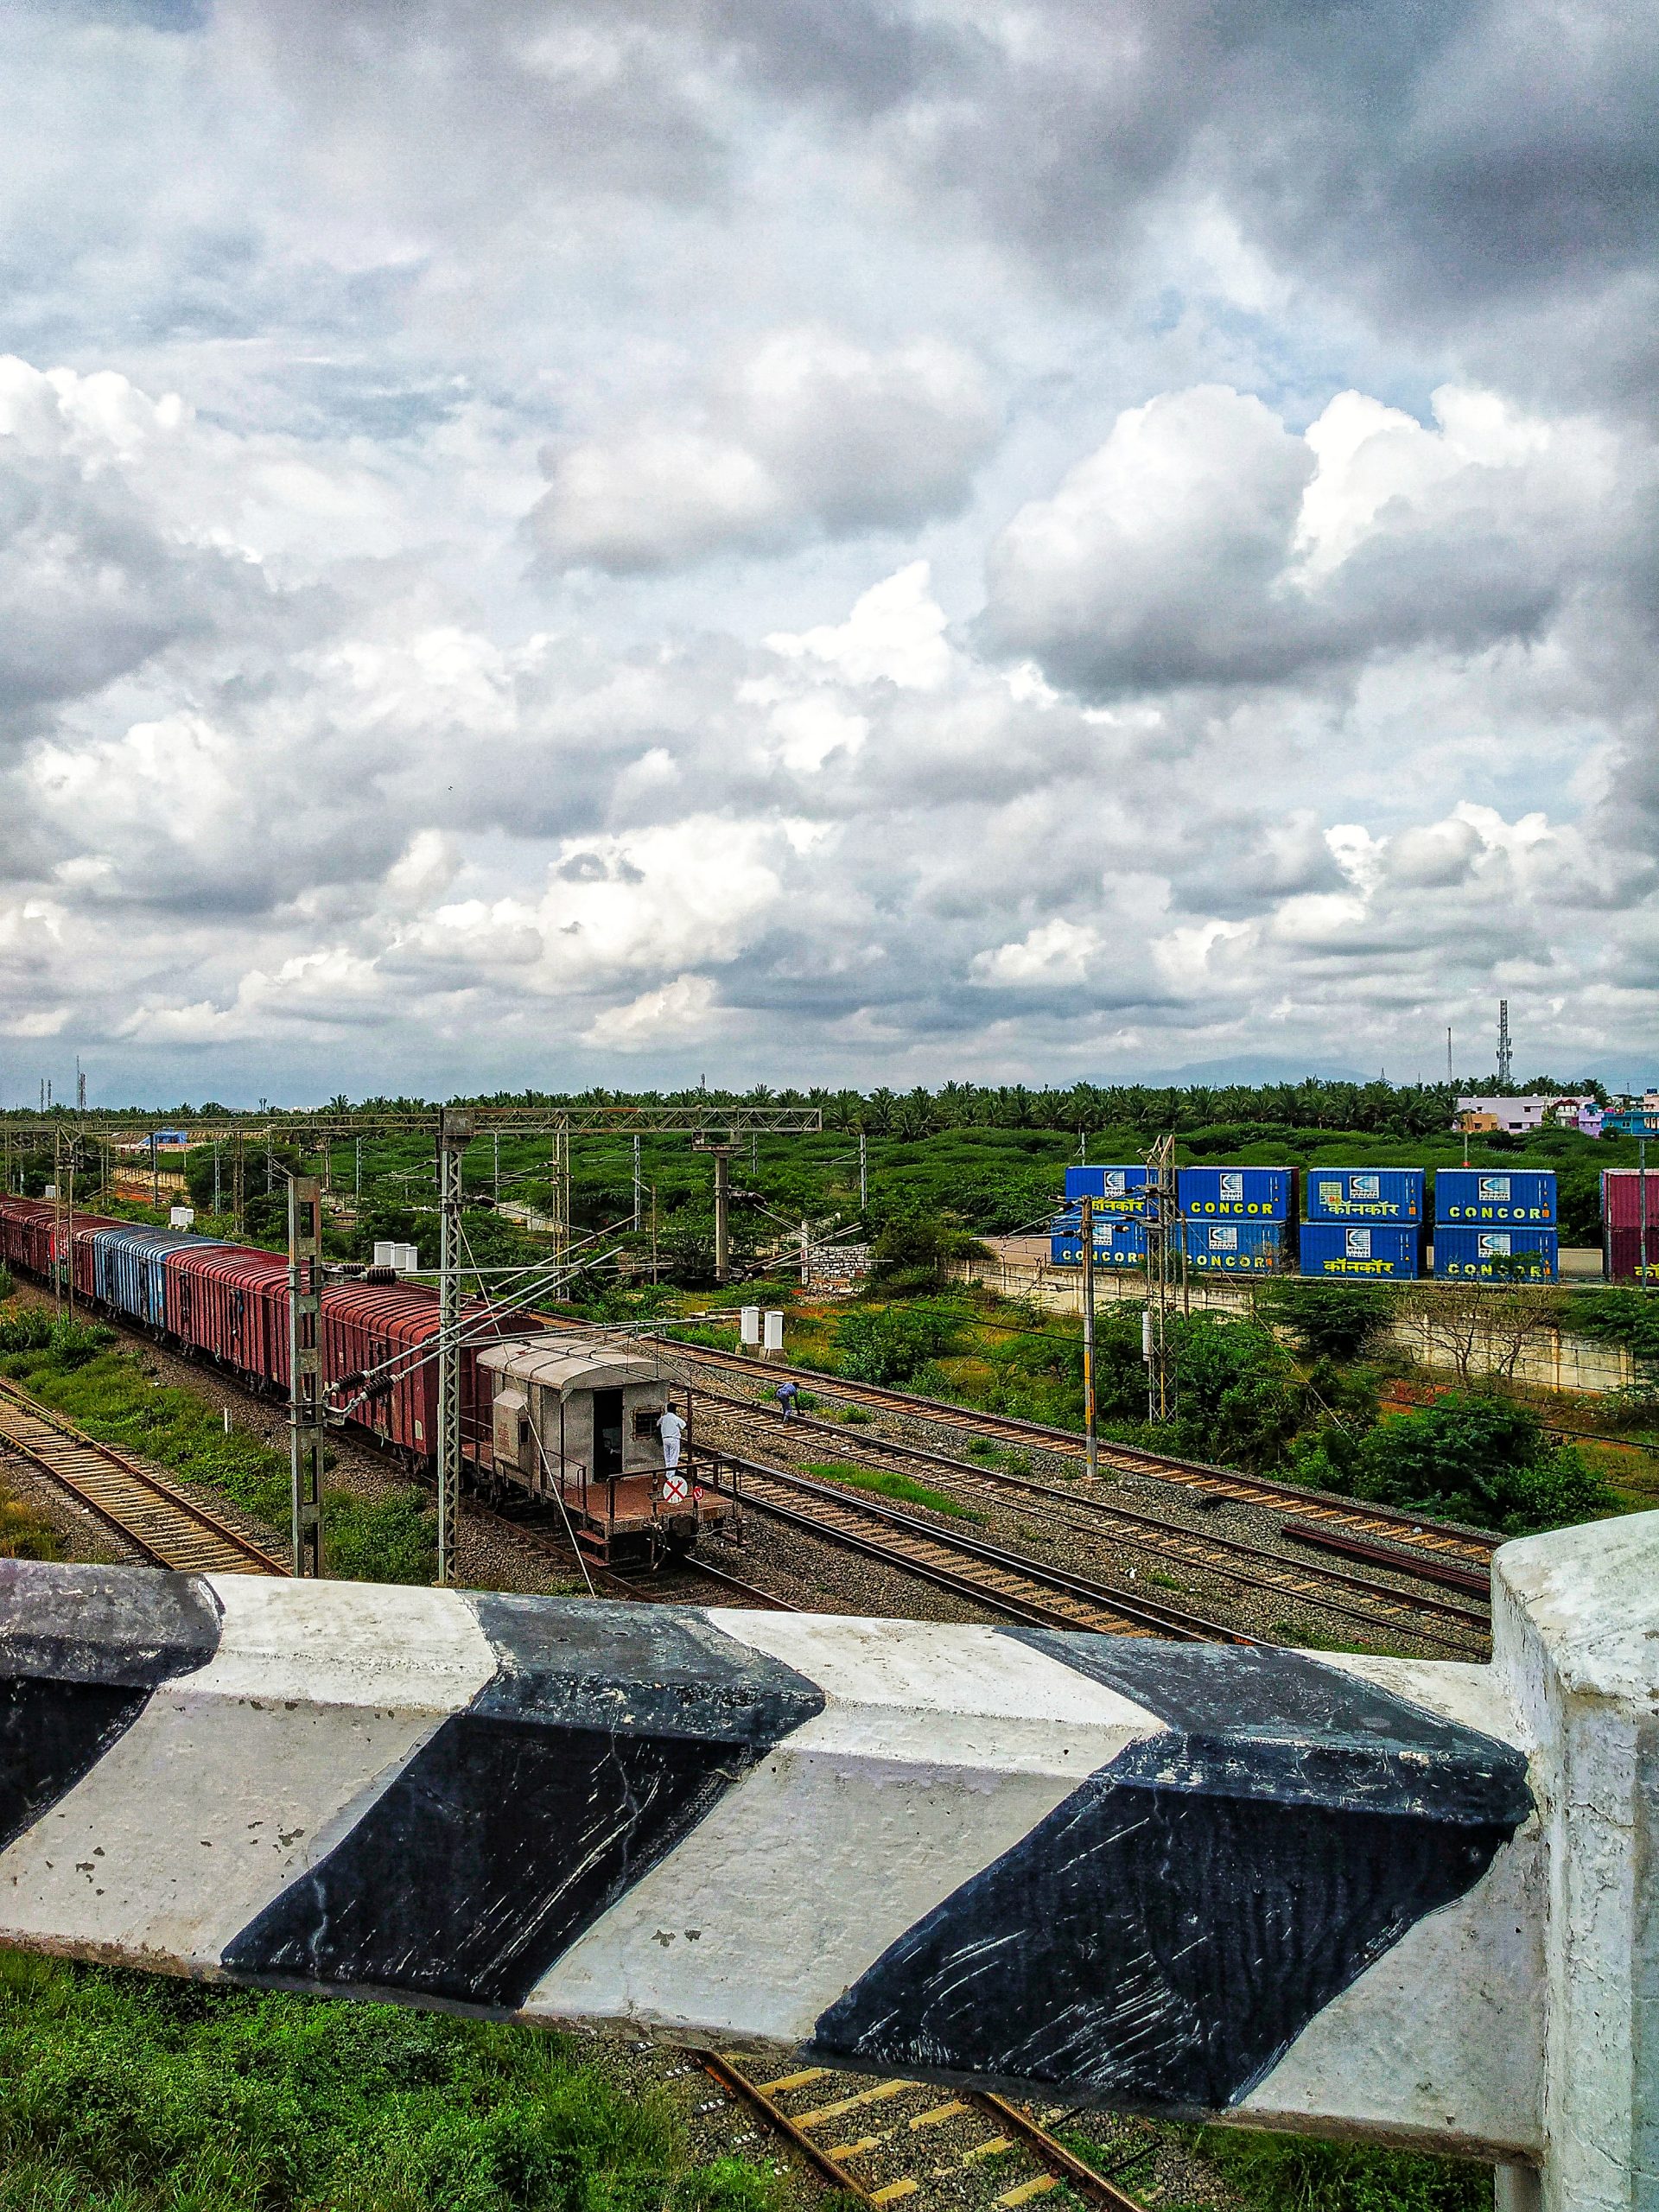 Railway container yard